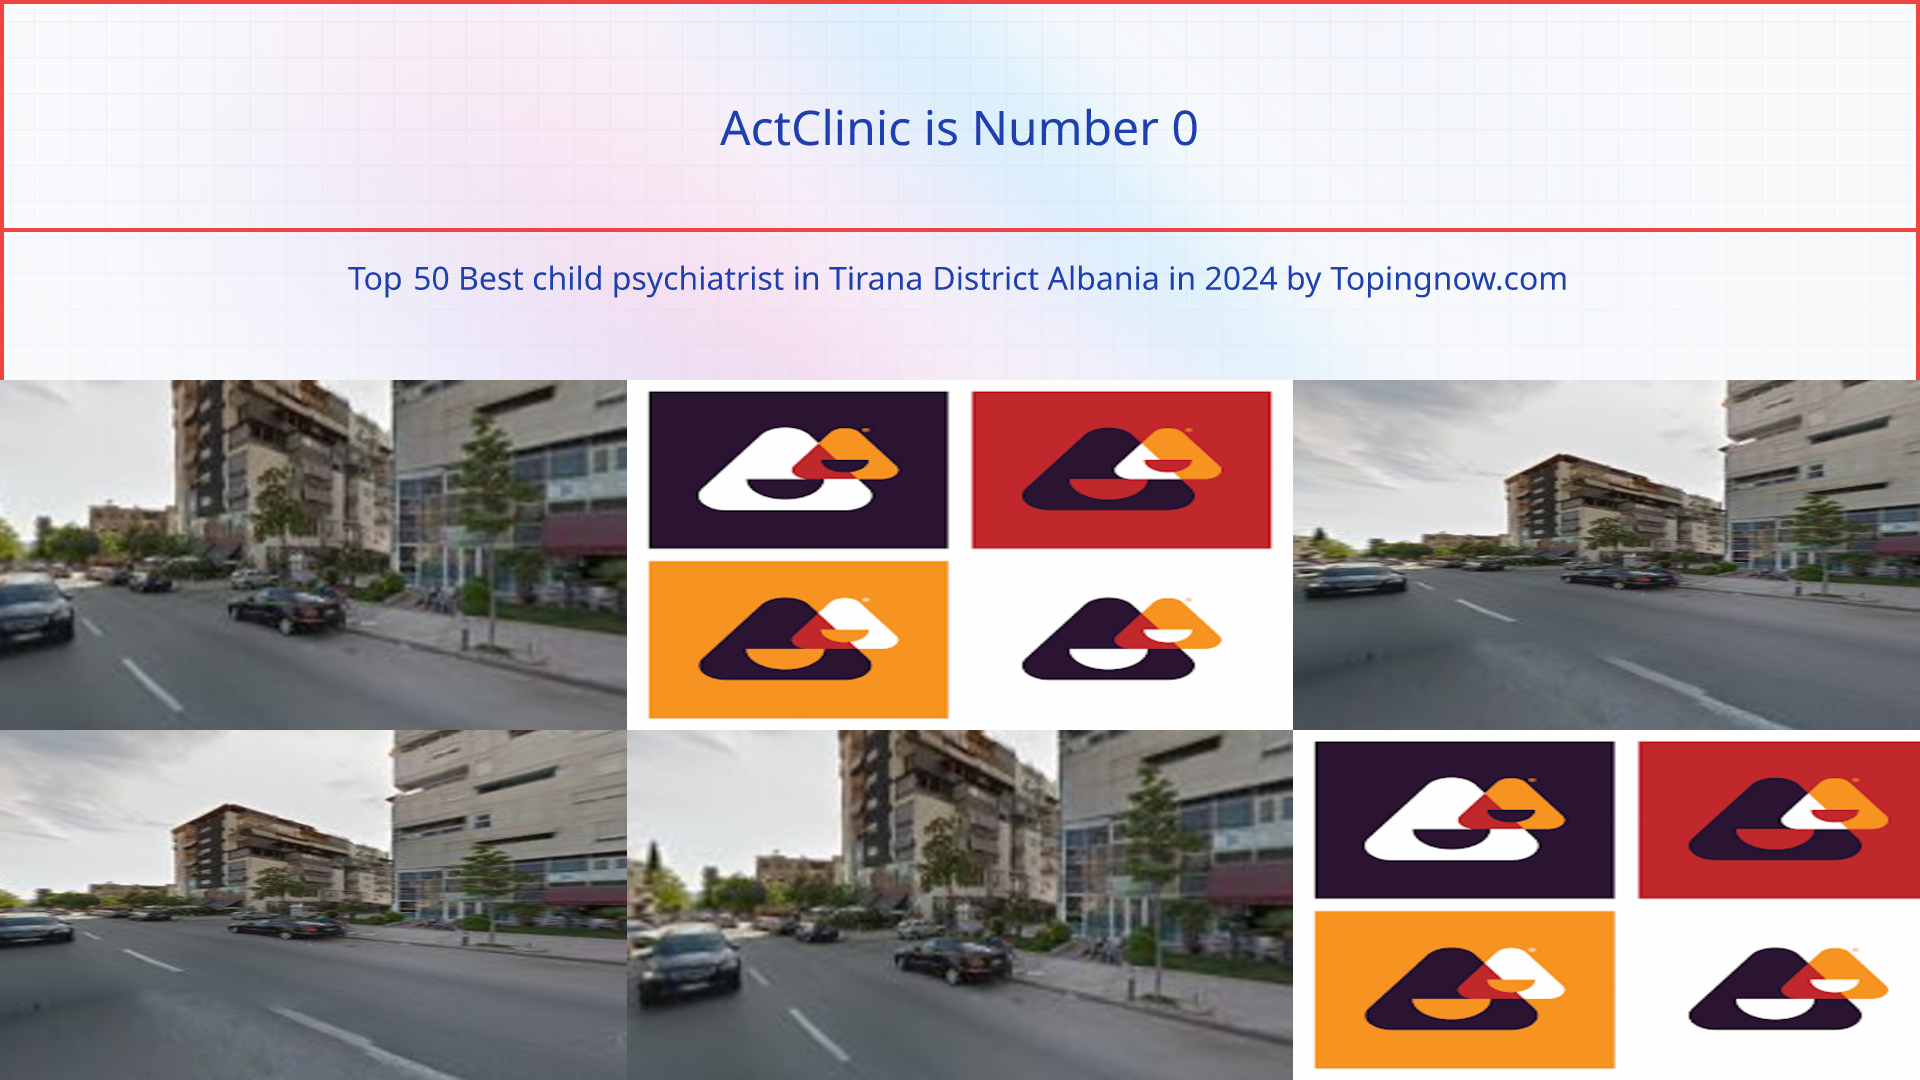 ActClinic: Top 50 Best child psychiatrist in Tirana District Albania in 2024